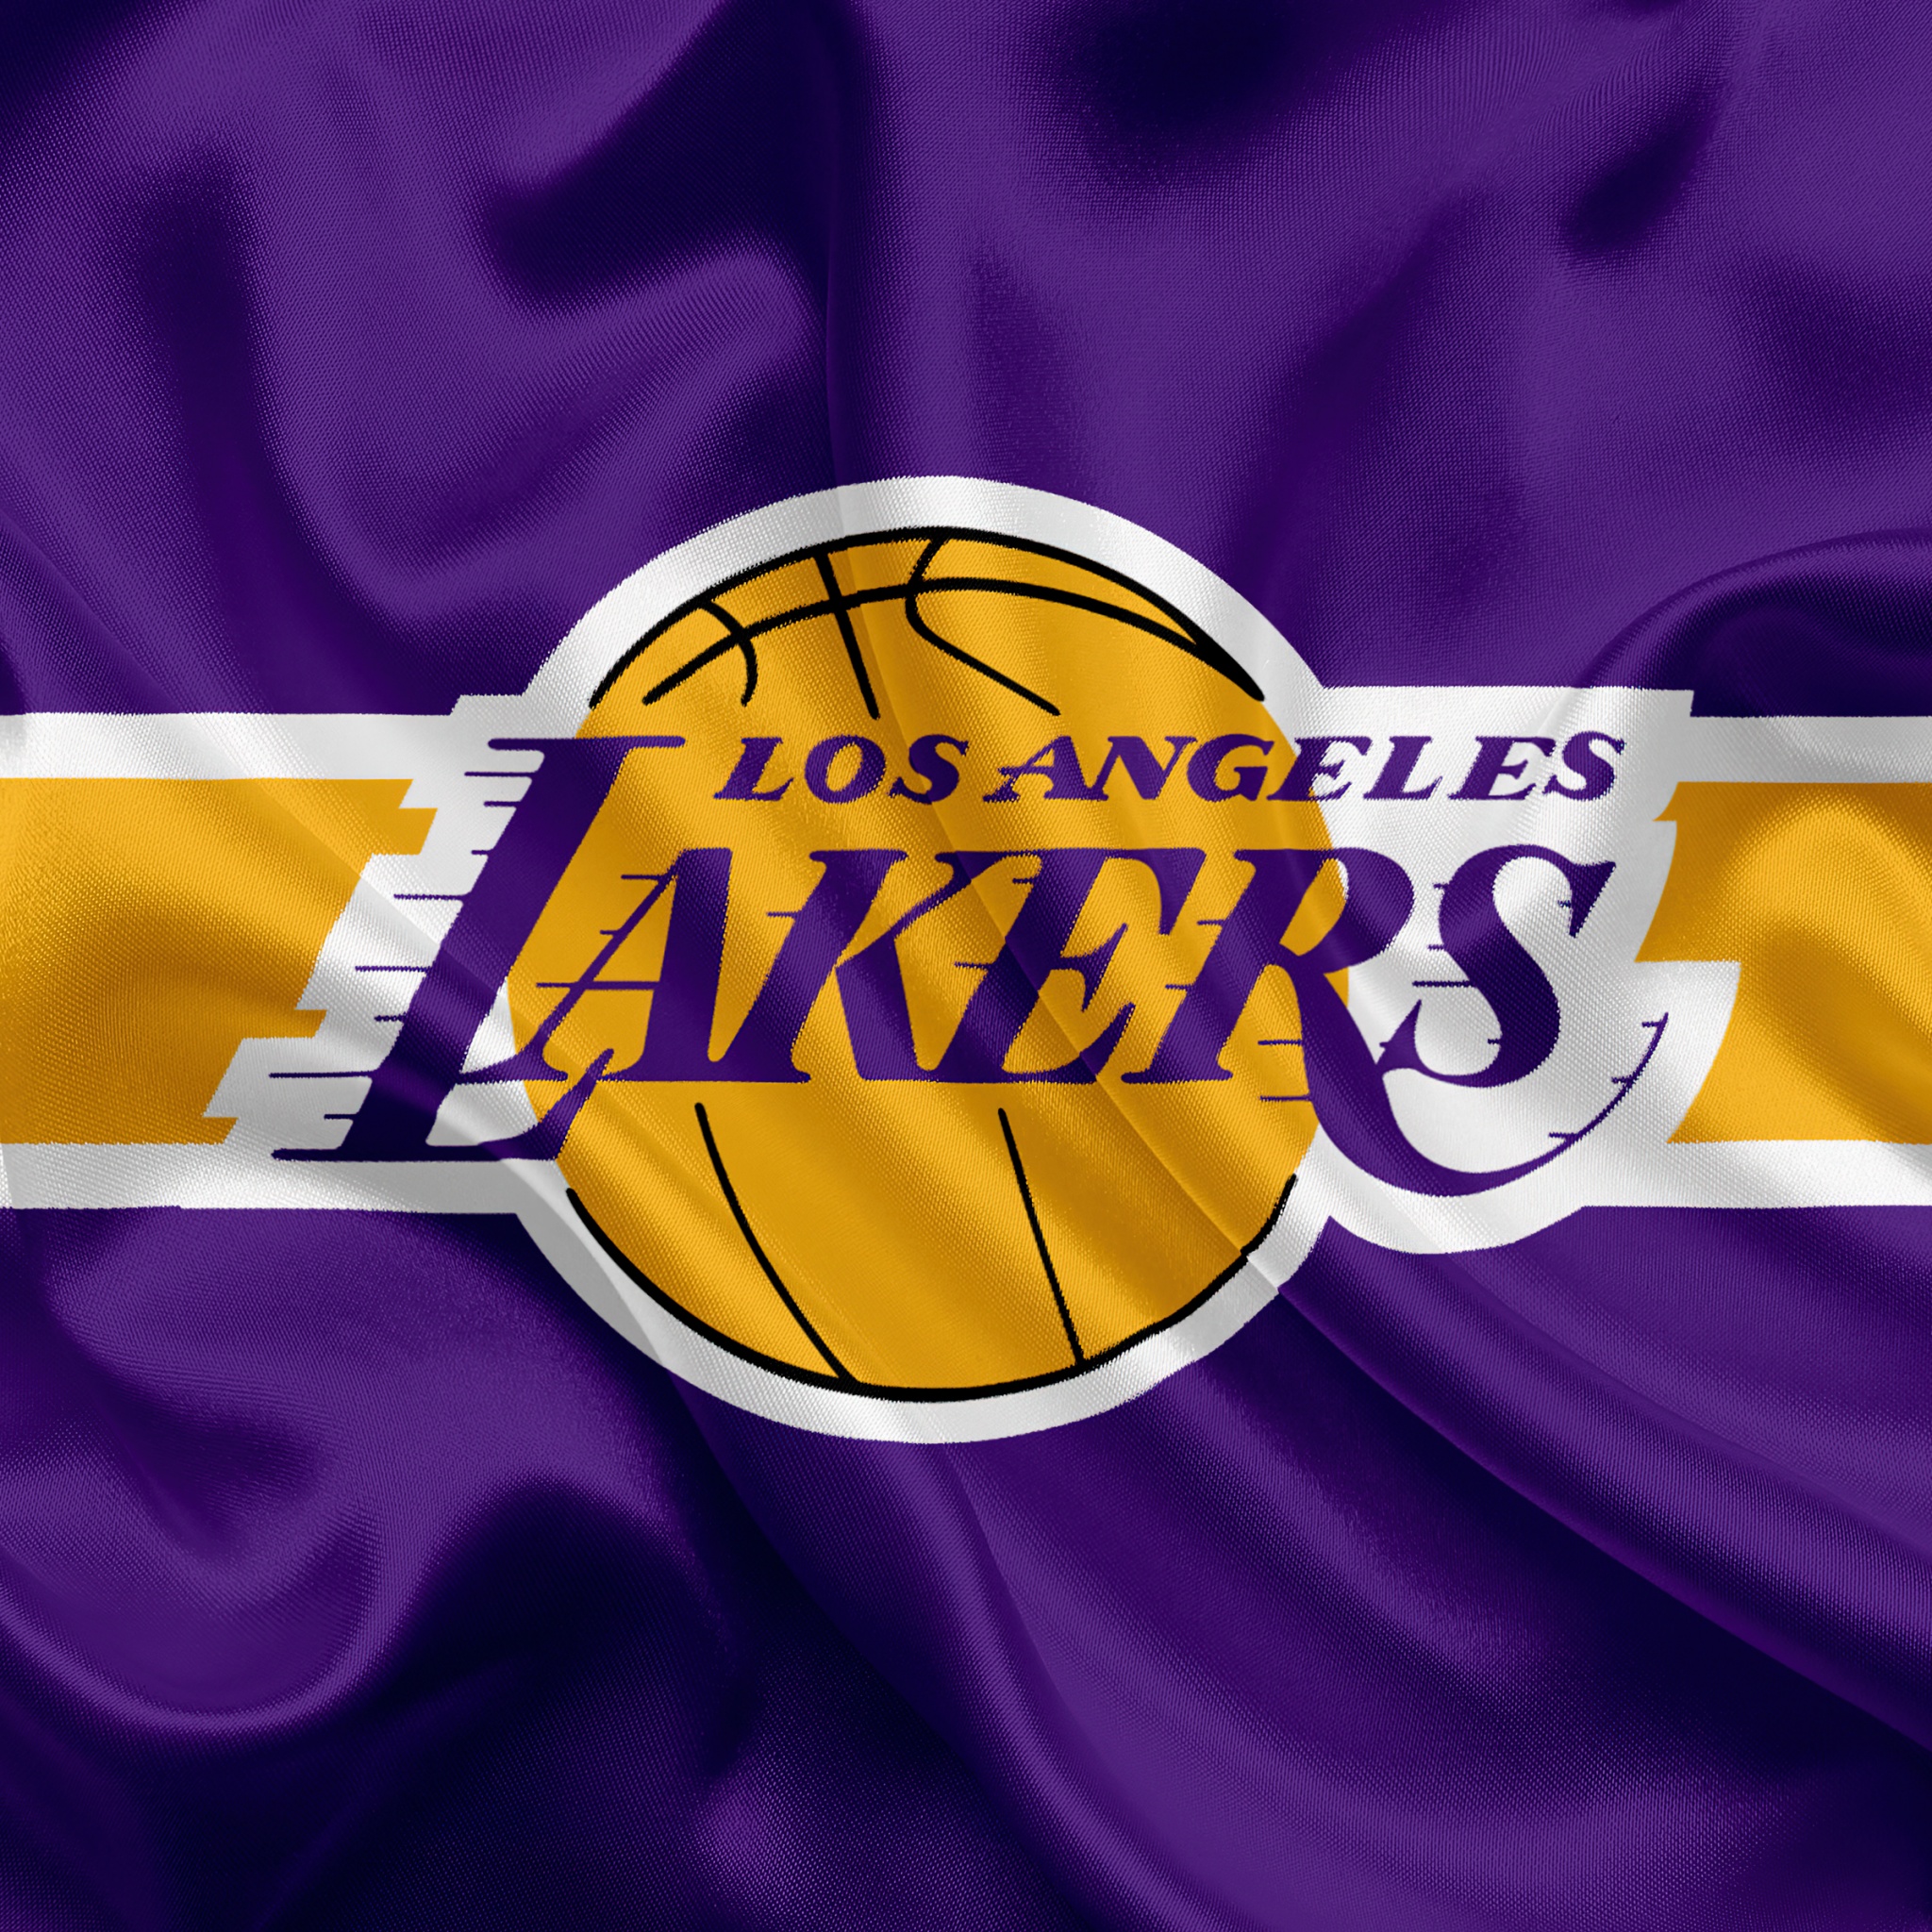 Los Angeles Lakers on X: wallpaper version? WALLPAPER VERSION